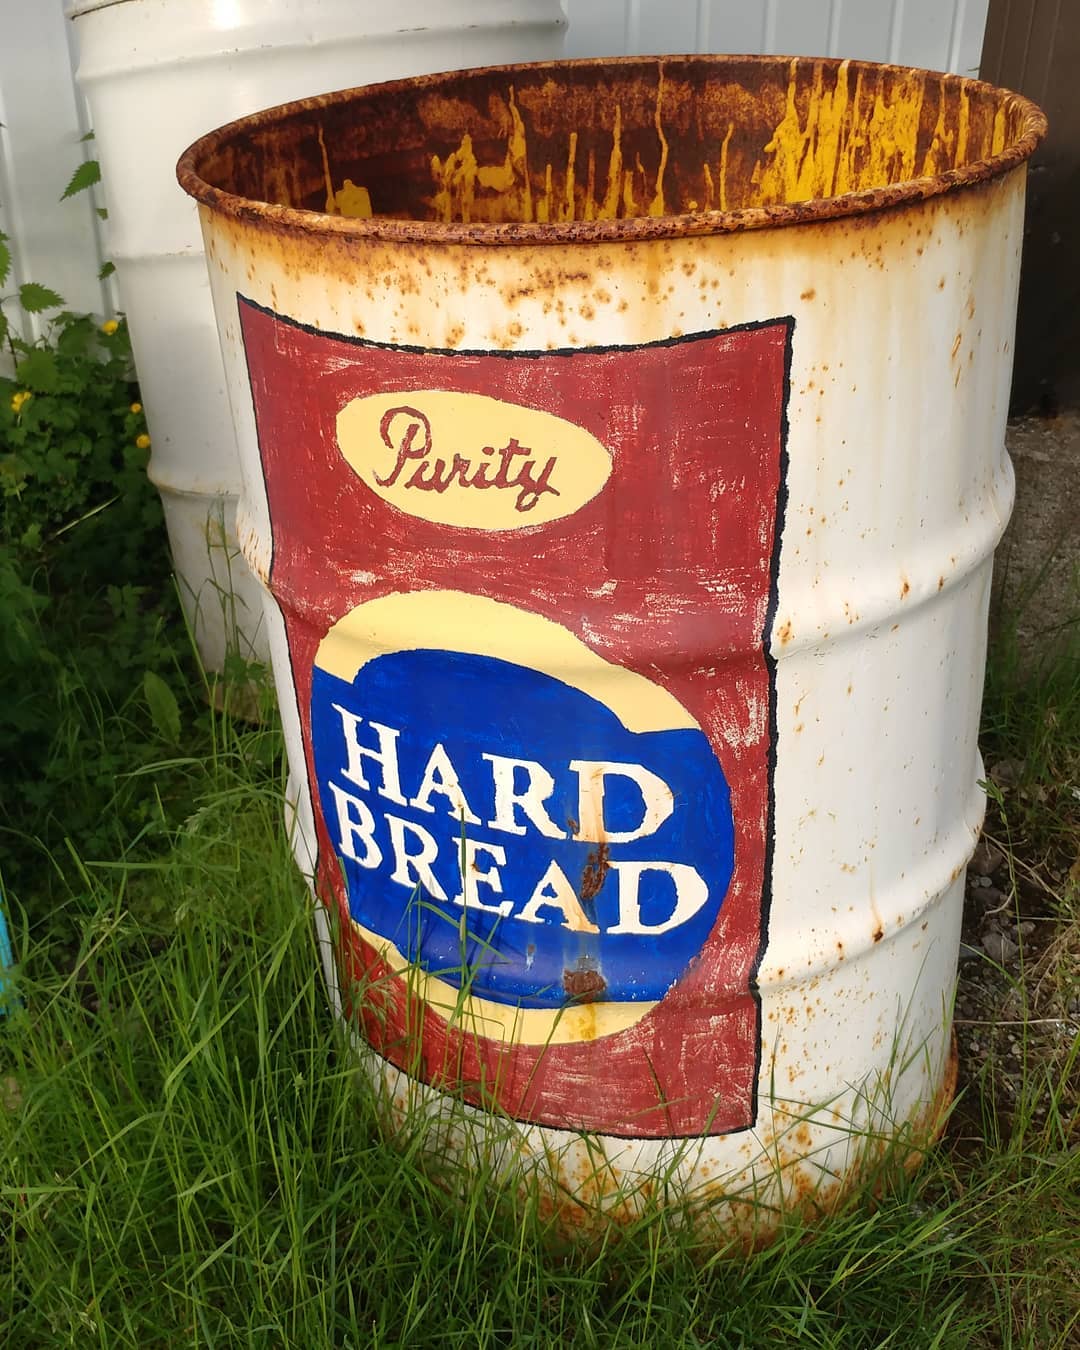 I'll take one 50 gallon drum of hard bread please 🤔